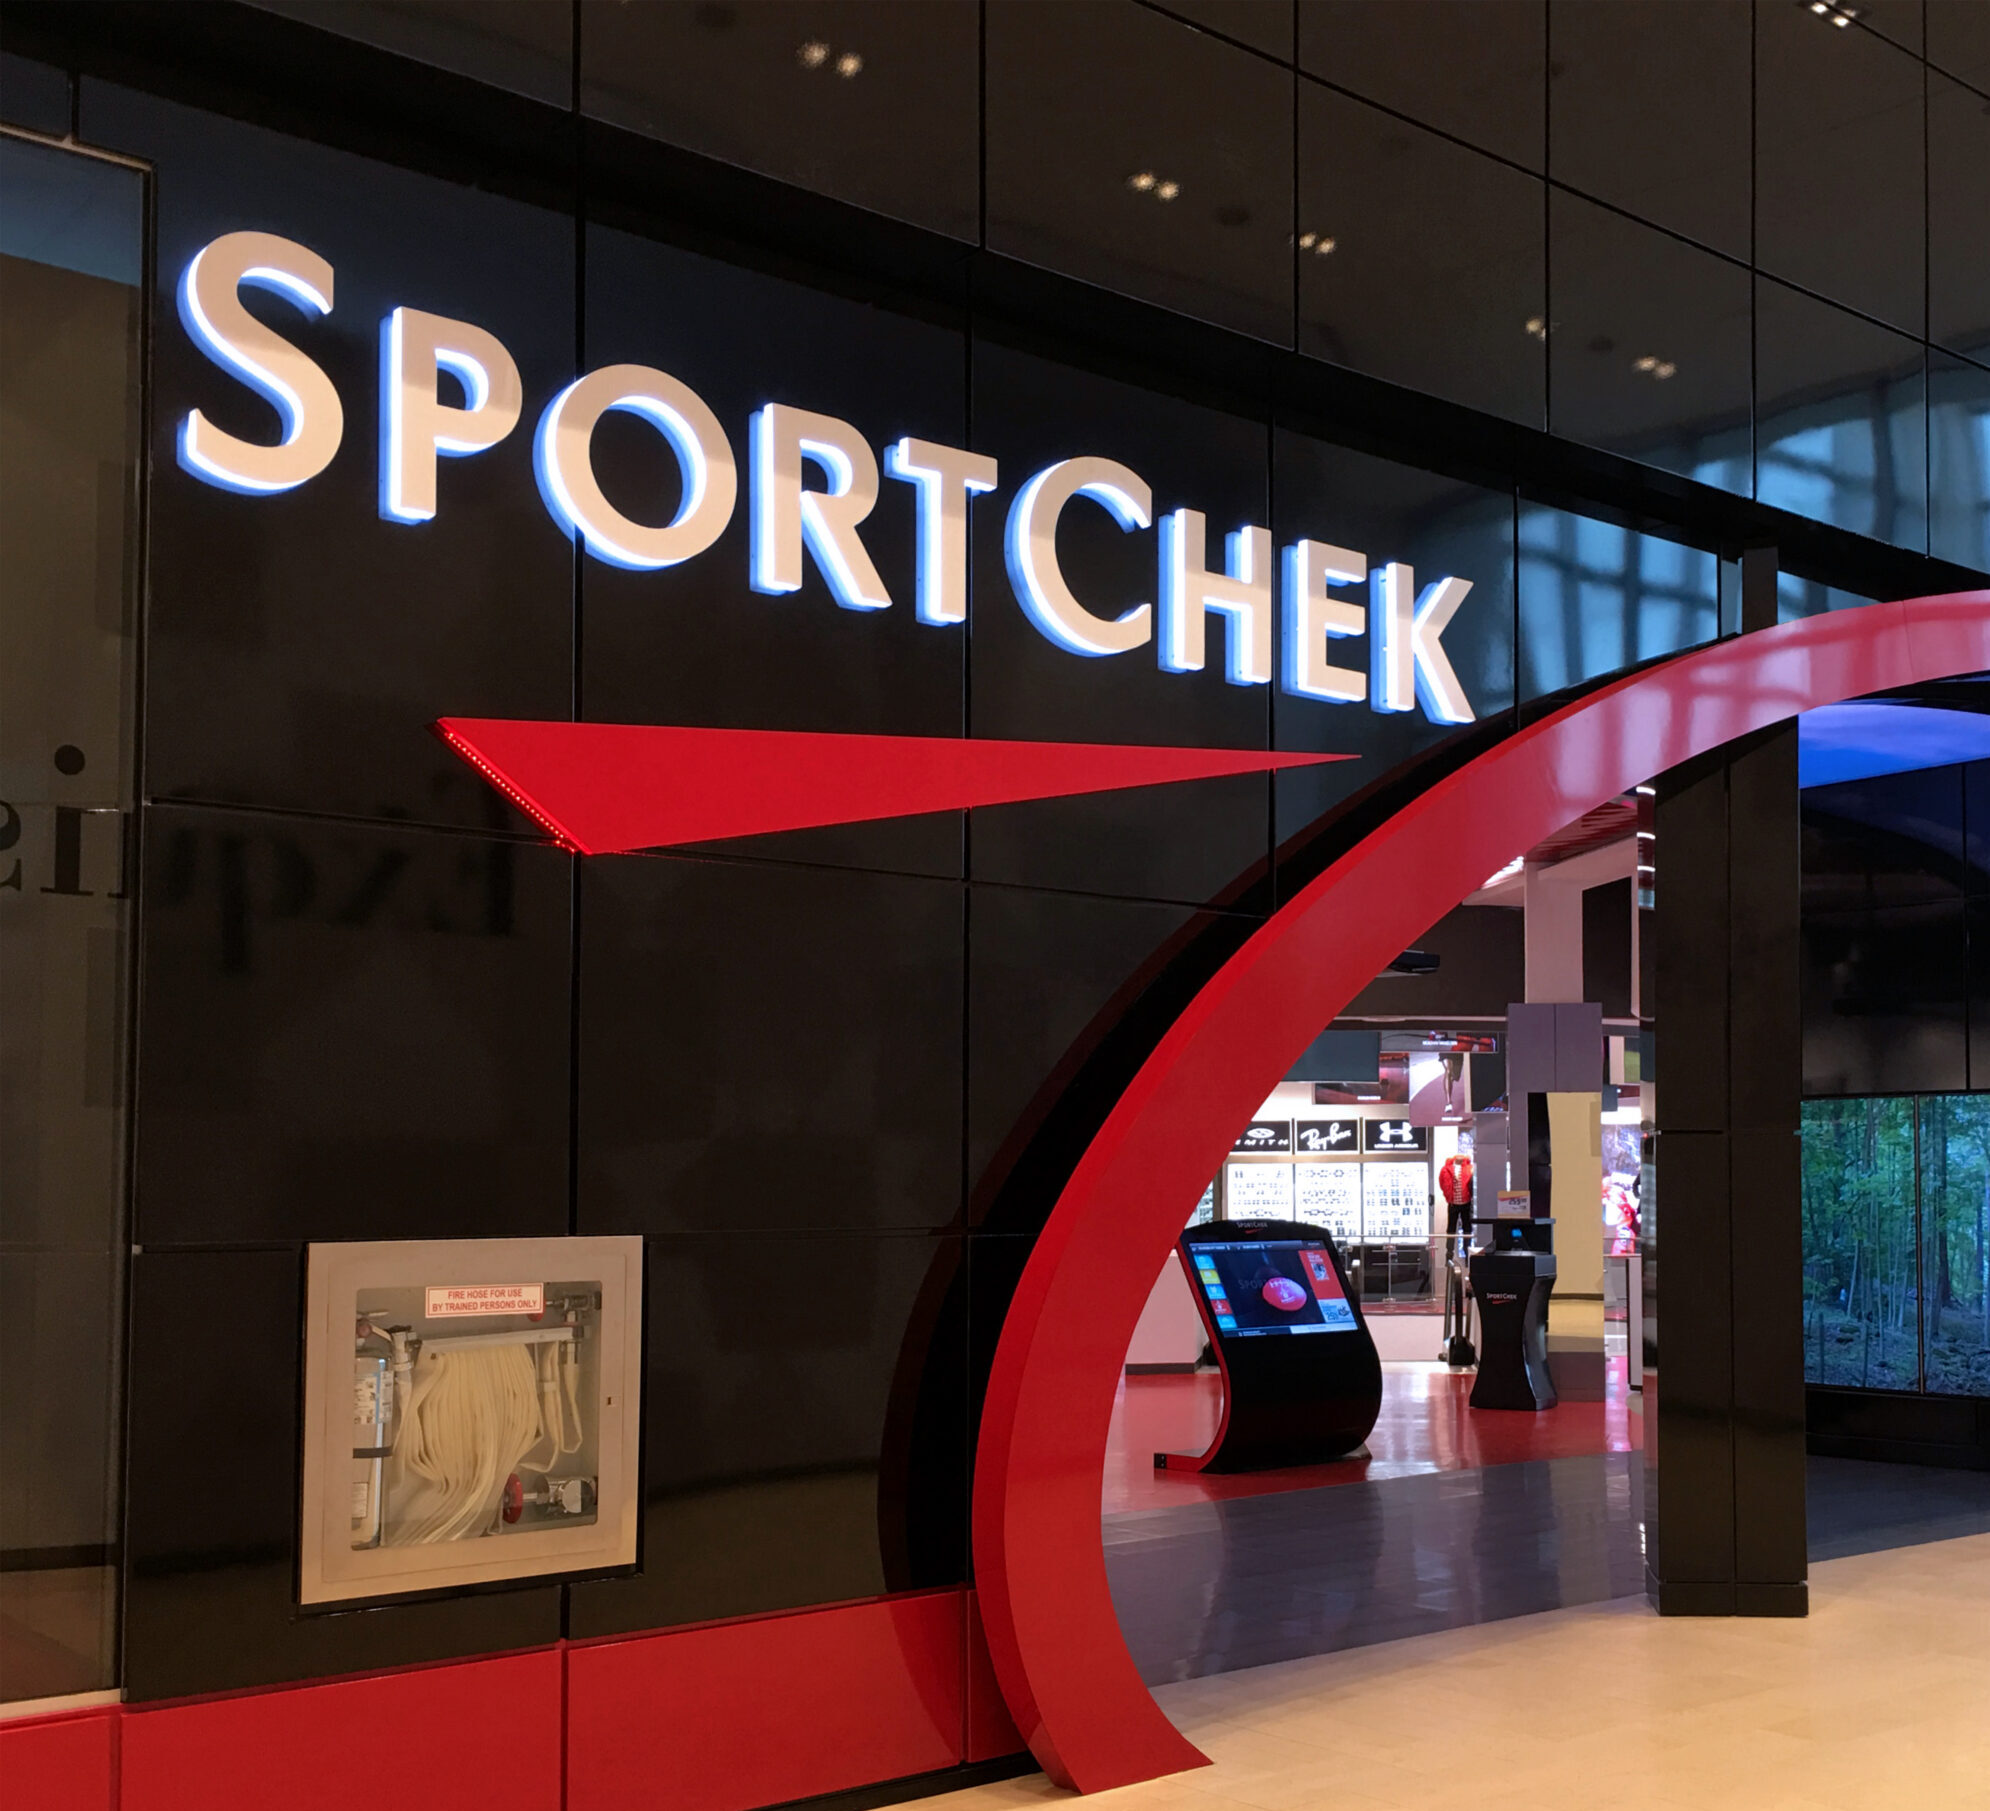 Sportchek entry signage